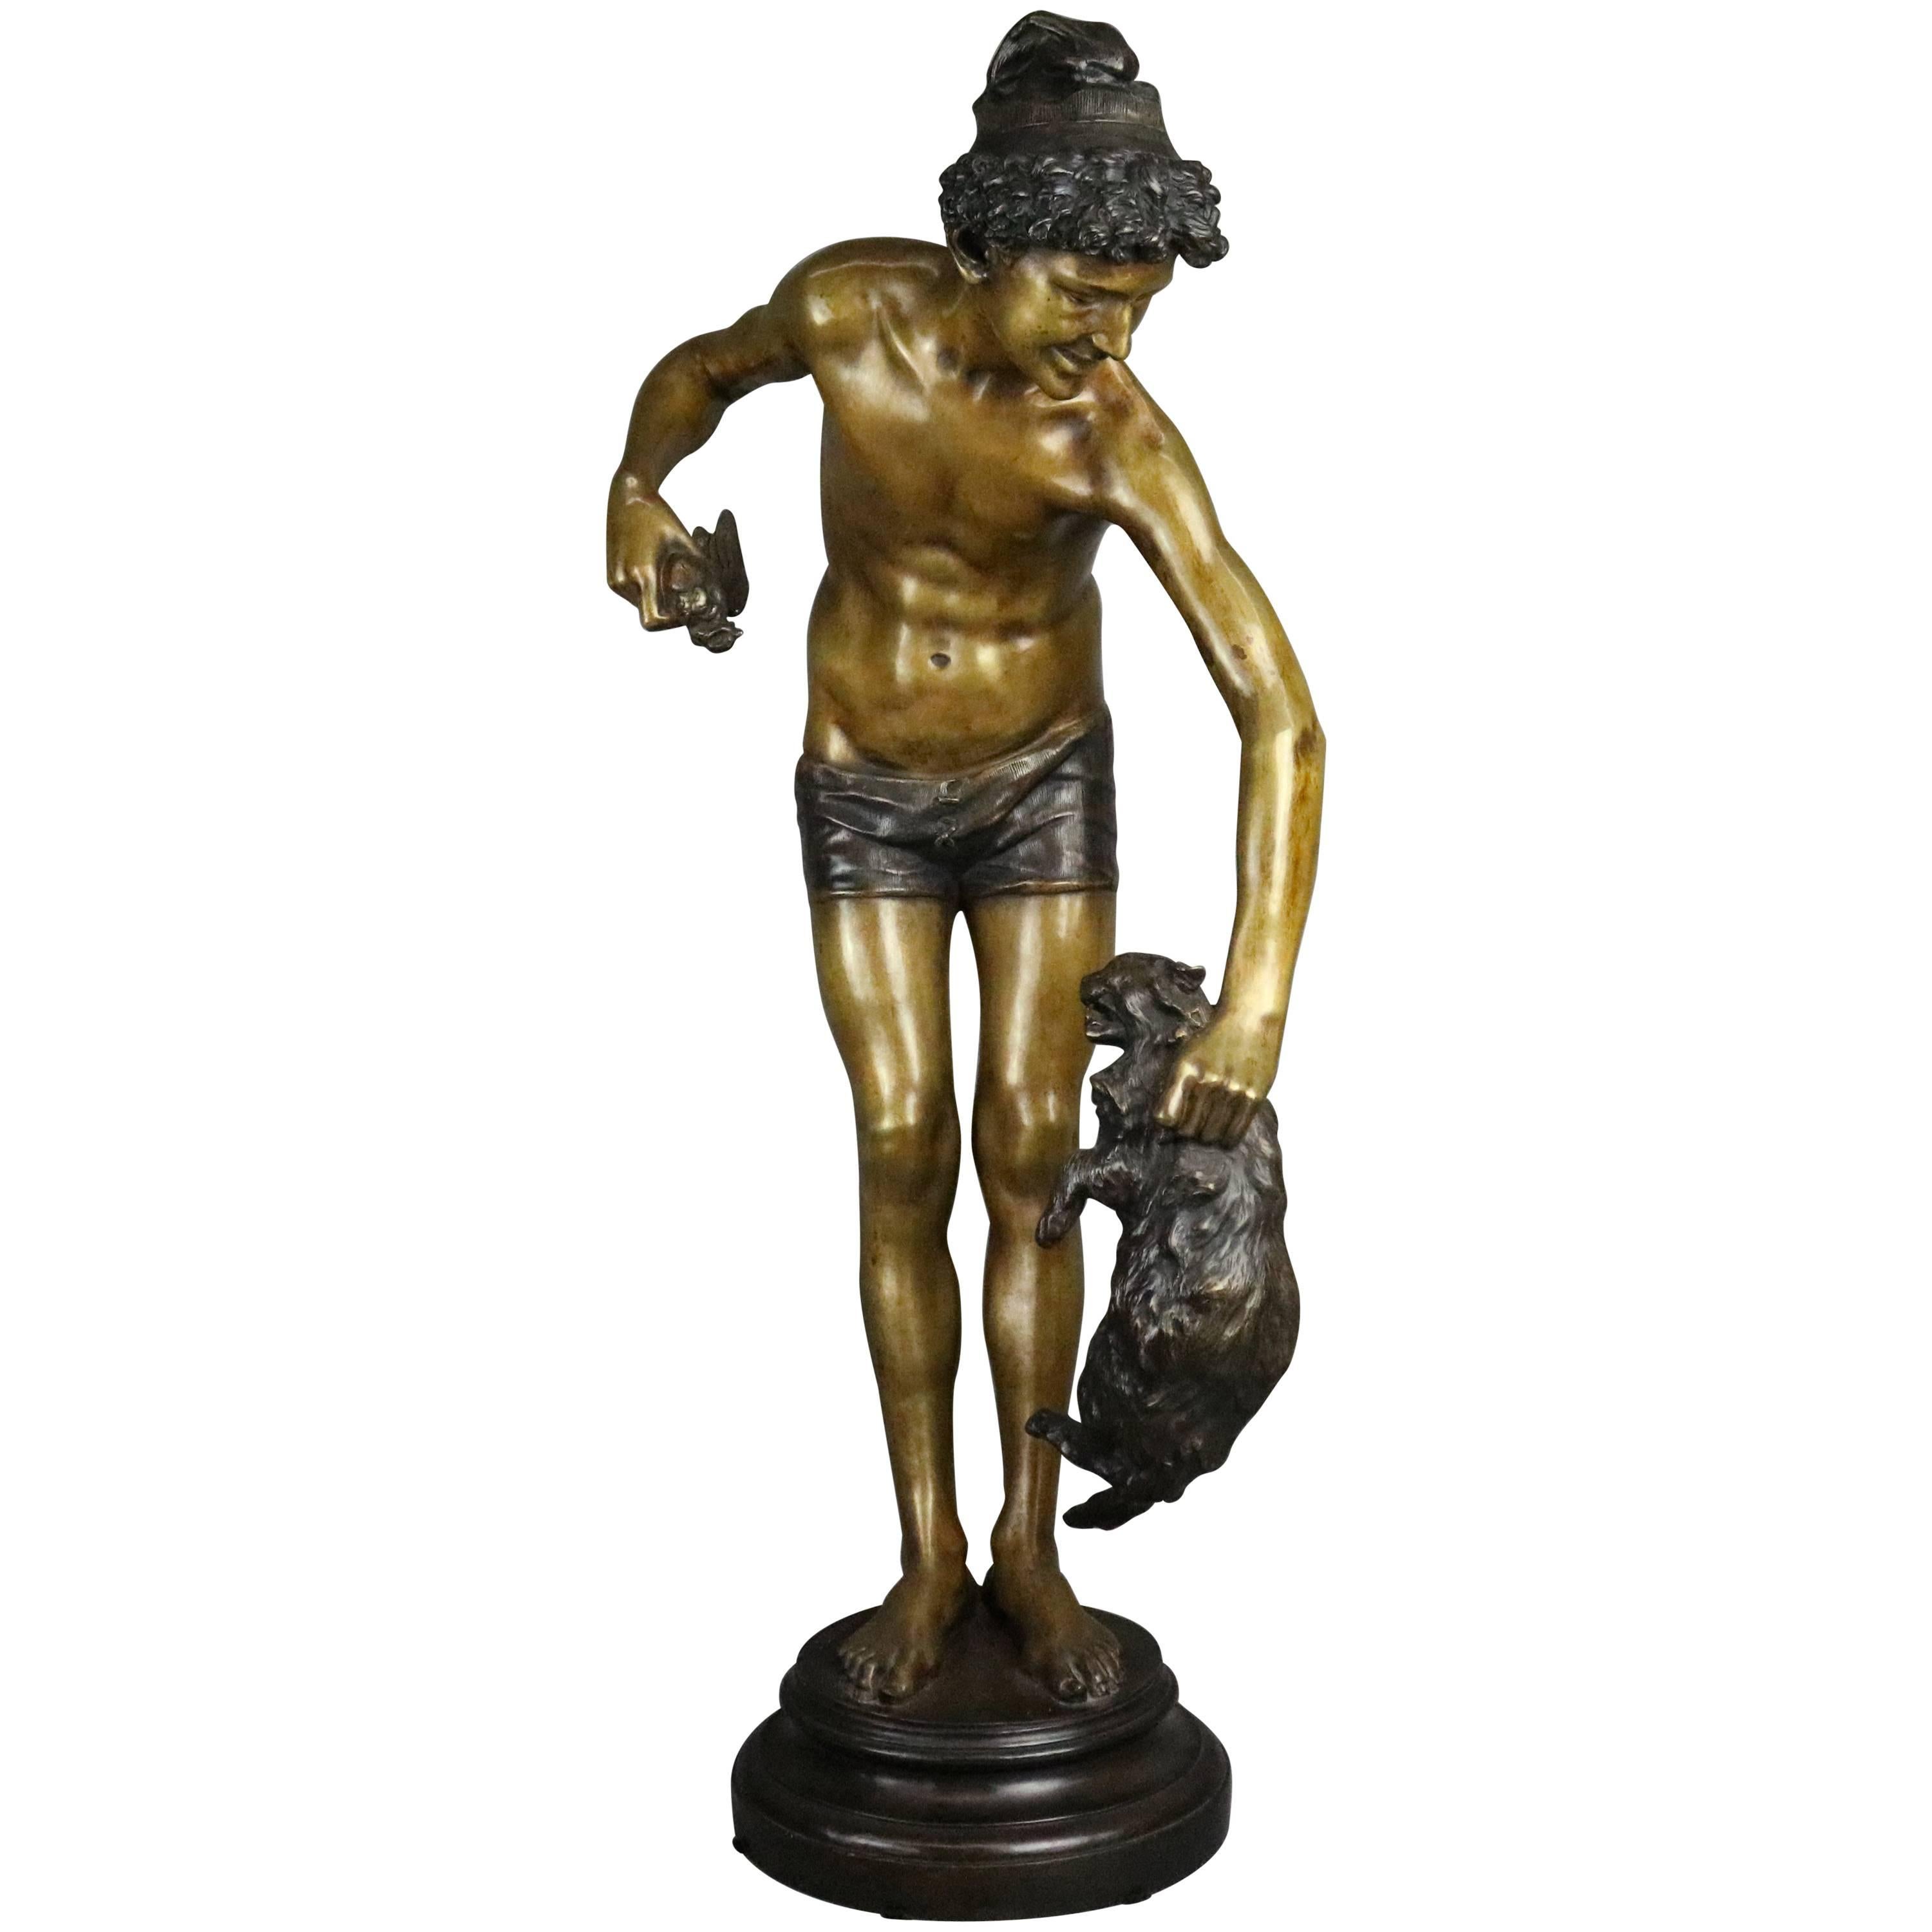 Antique Bronze Sculpture "Separating the Foes" by E. Guilbert, circa 1880